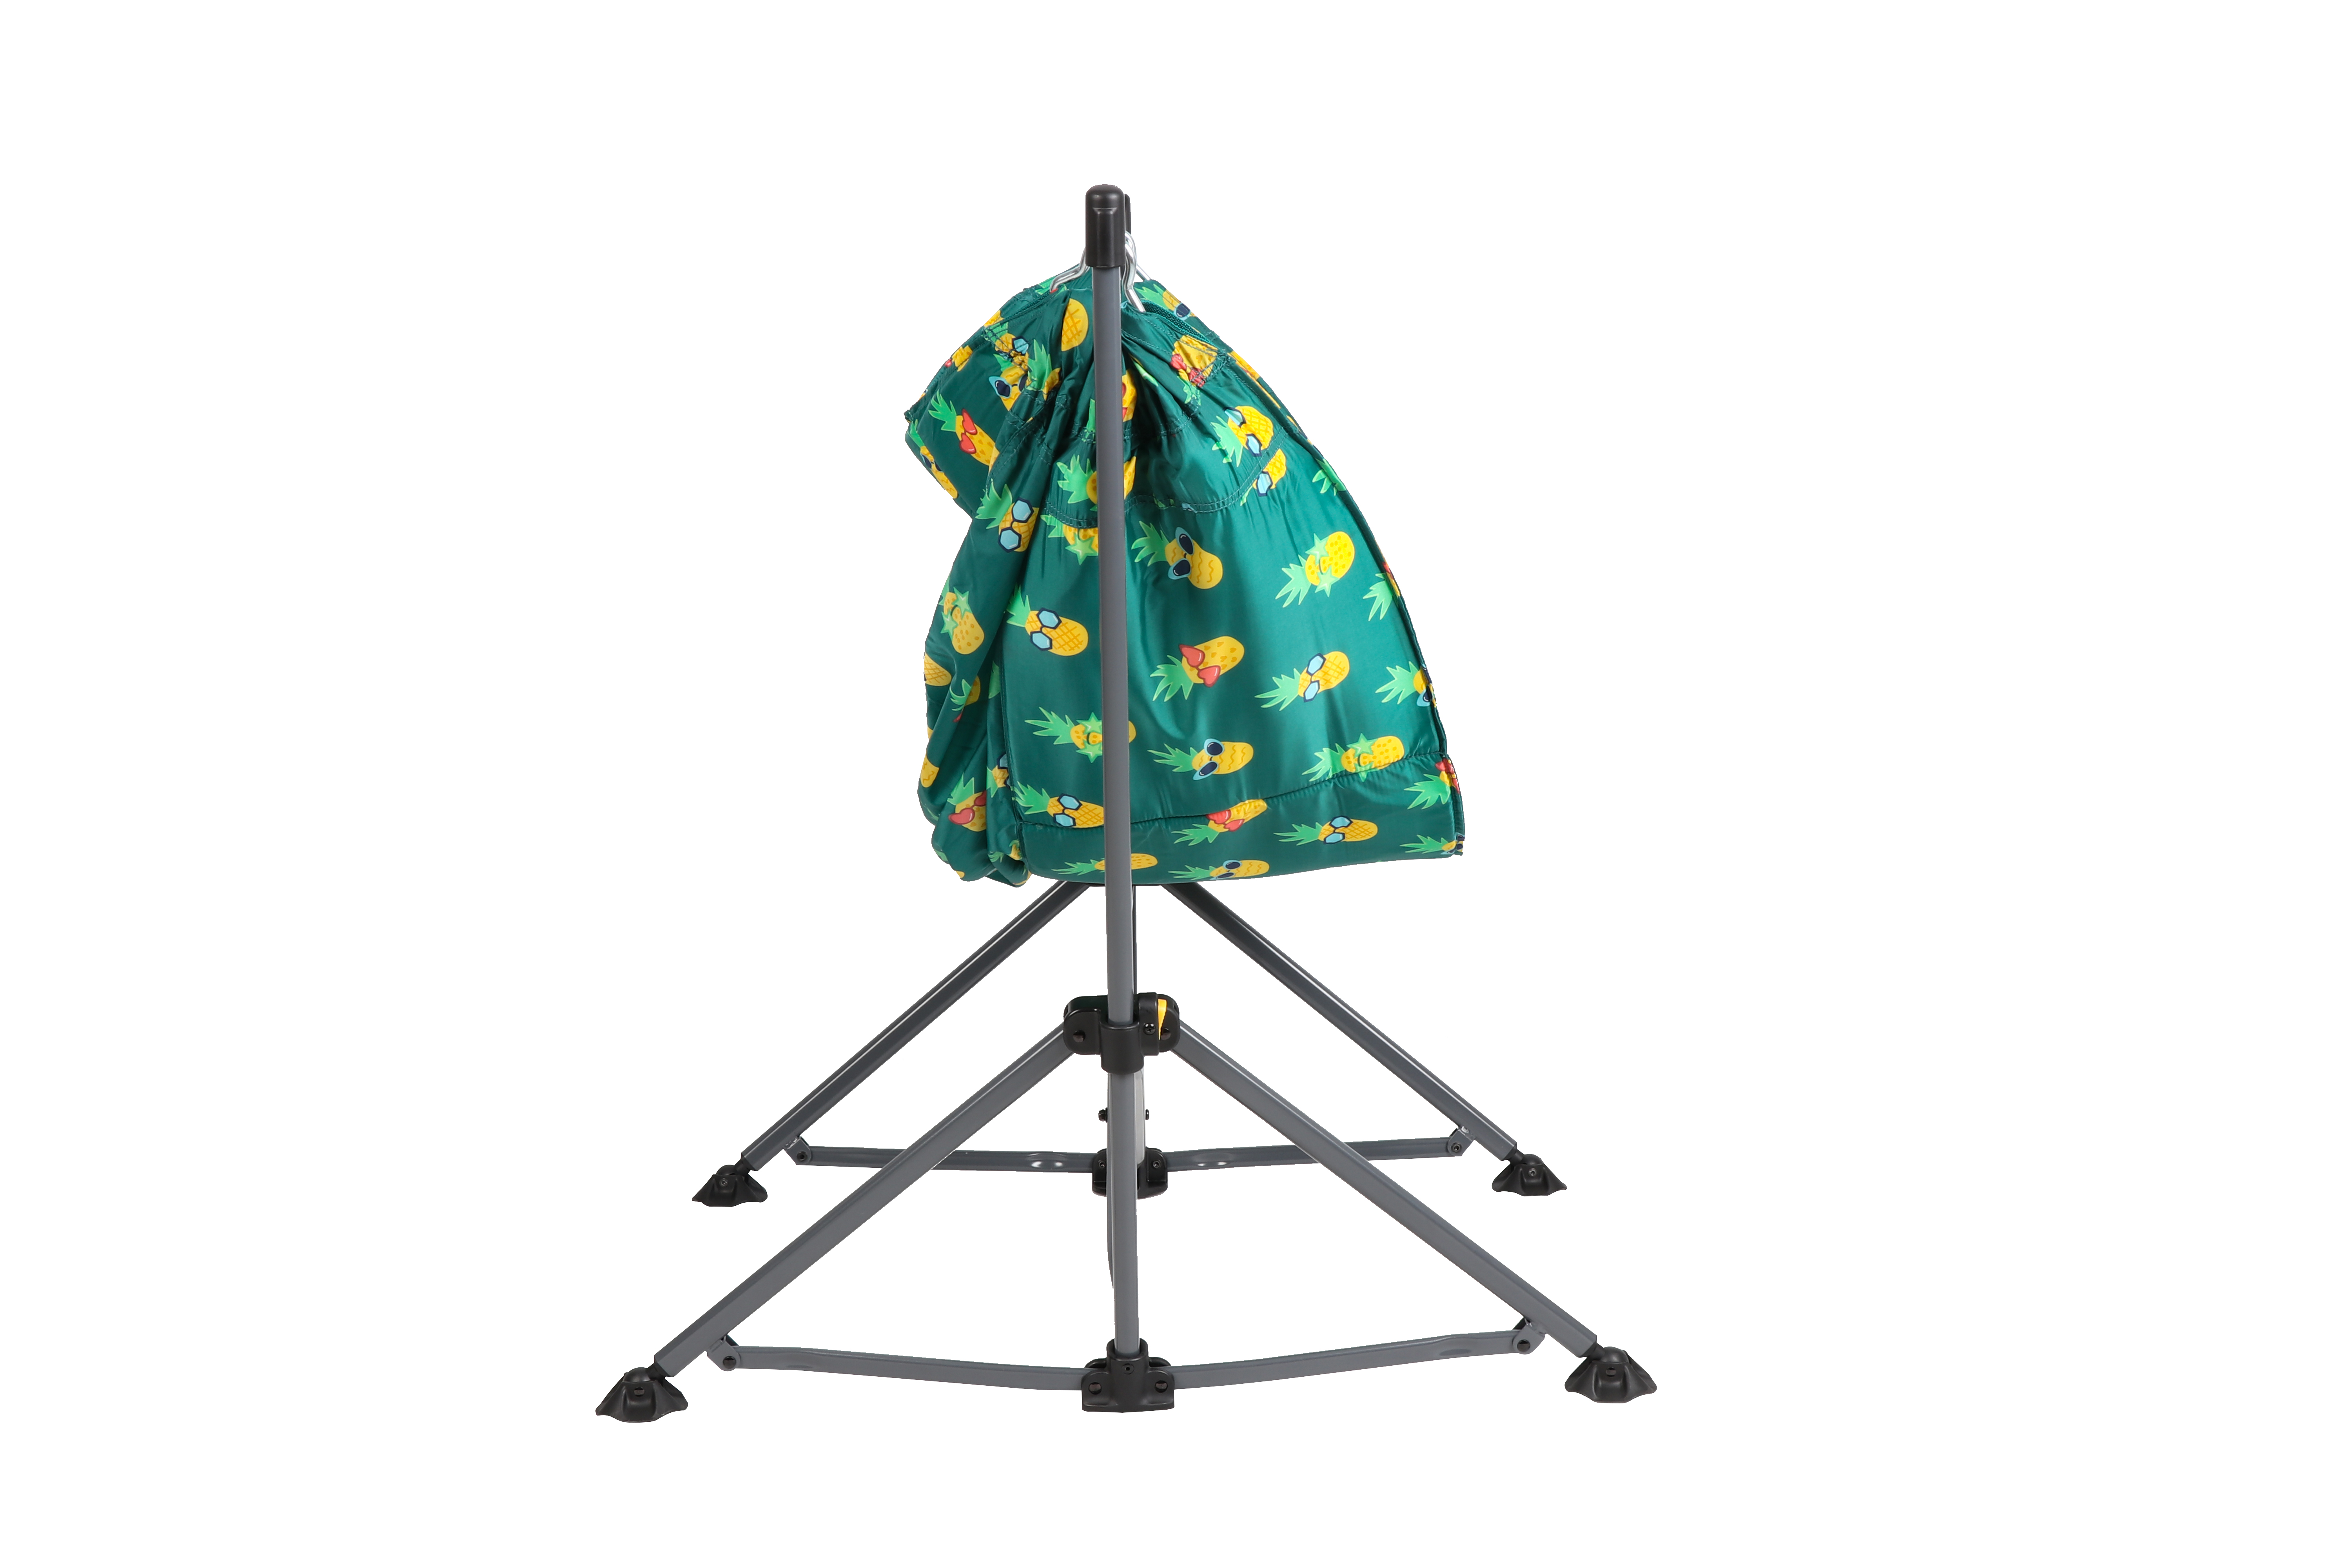 Ozark Trail Pineapple Hammock Chair, Nylon, Green - image 2 of 5